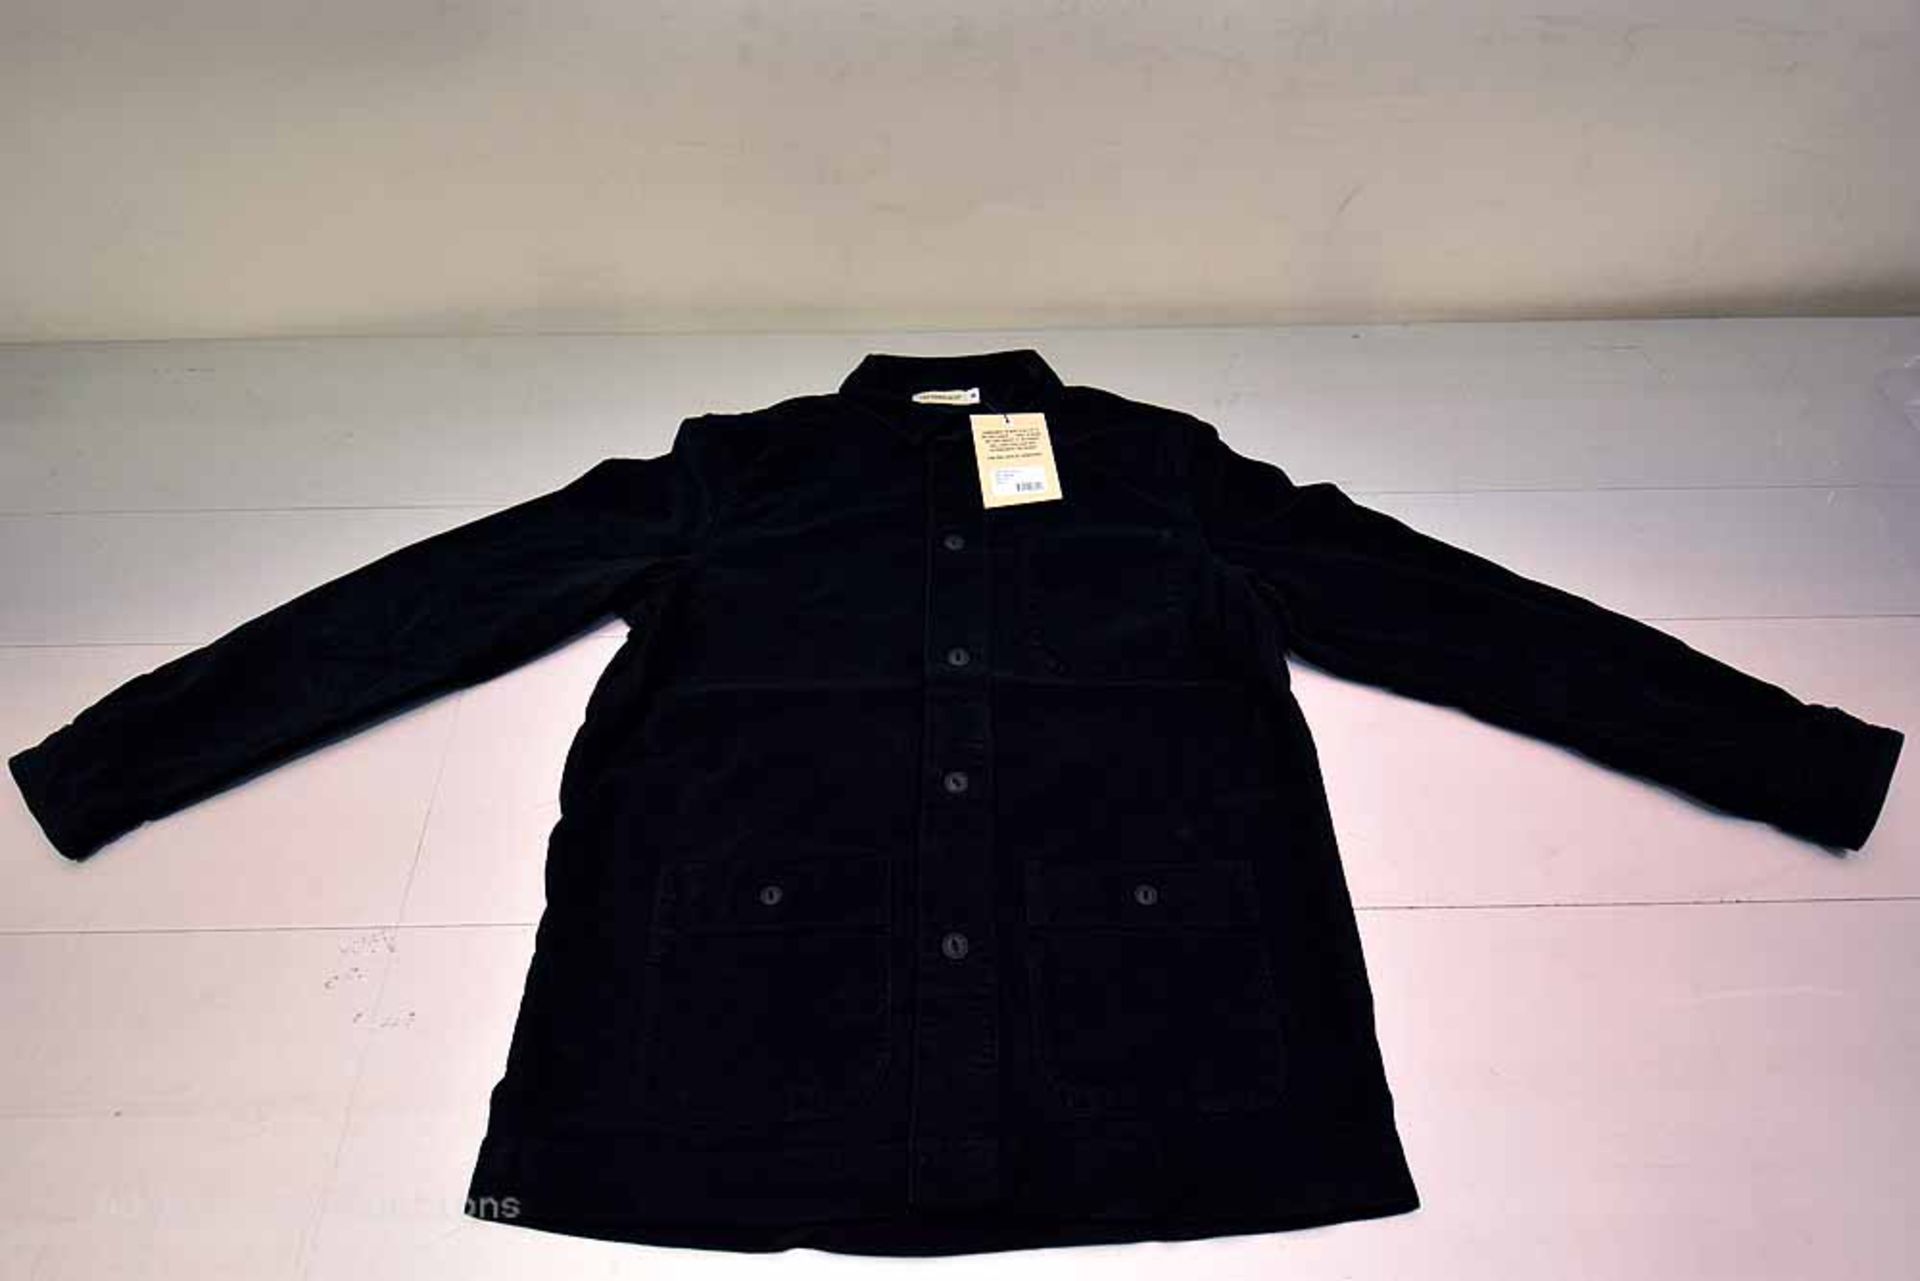 The Cords & Co. "Noah" Style, Mens Collard Long Sleeve Shirt(Black) Small, Medium, Large, X-Large - Image 3 of 5